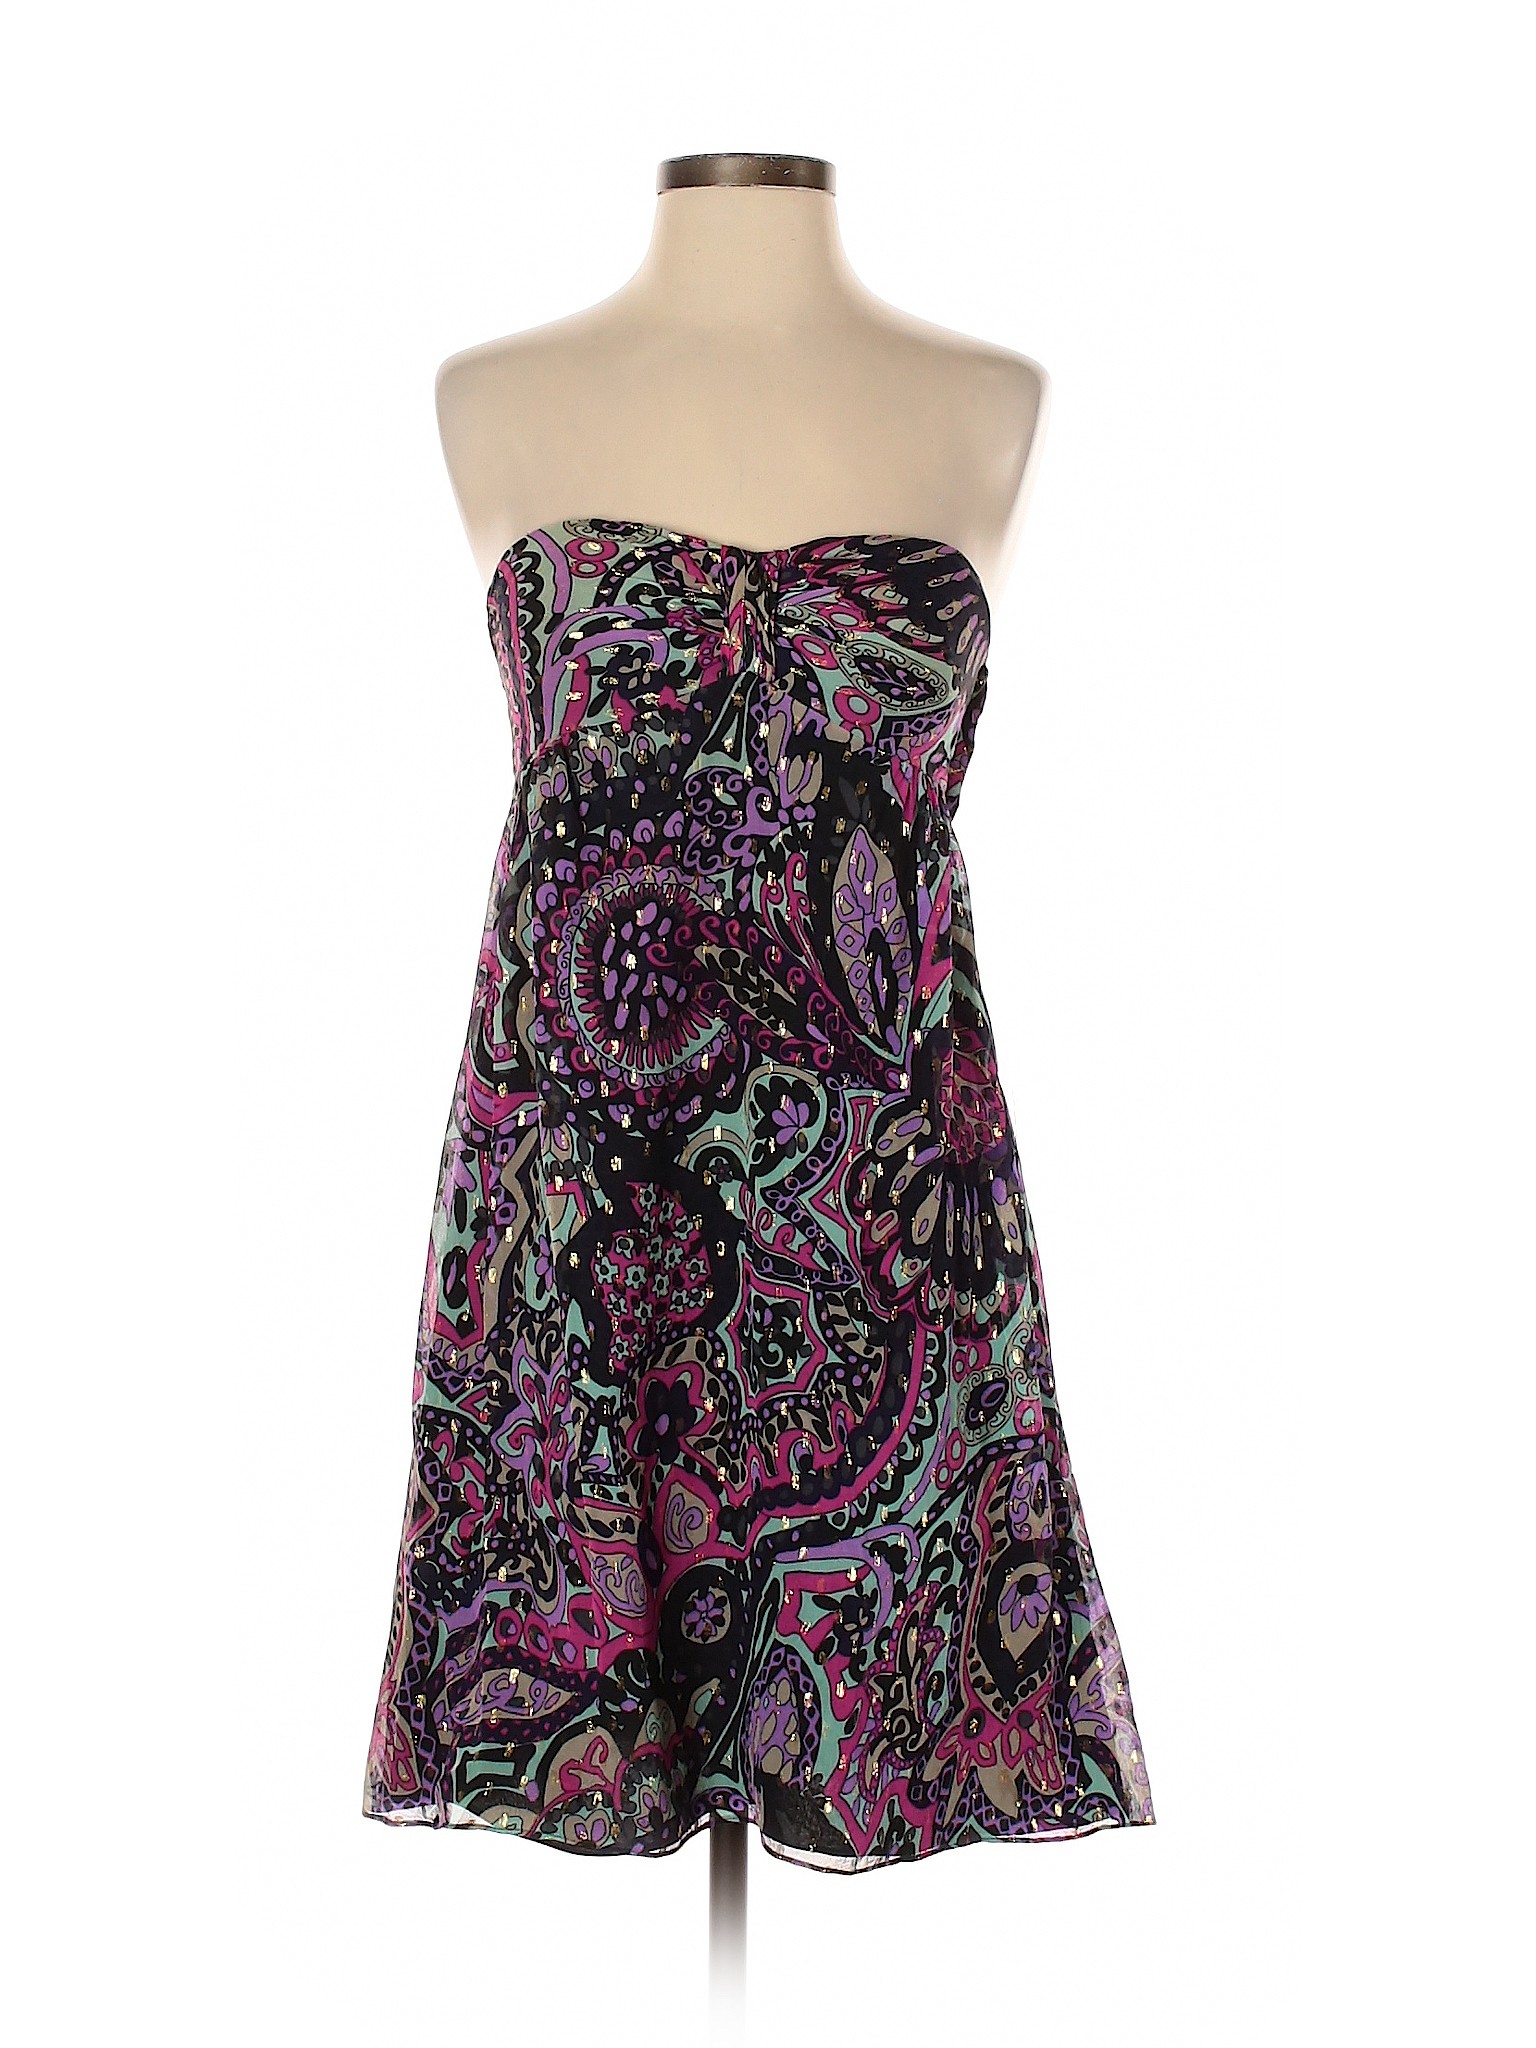 Tibi Women Purple Cocktail Dress 4 | eBay